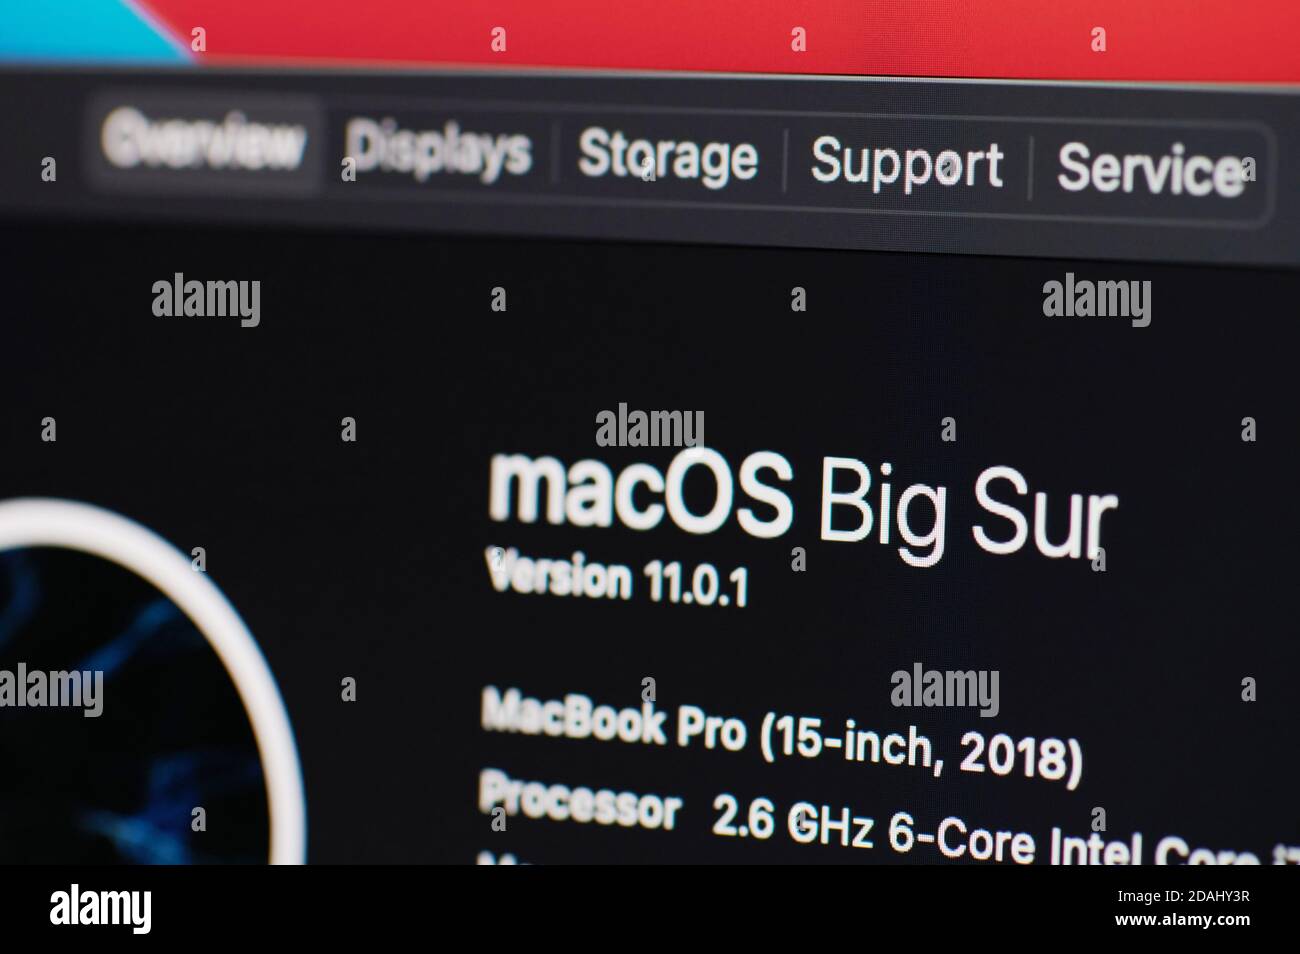 New york, USA - November 13, 2020: New version of Macos Big Sur on screen display close up view Stock Photo